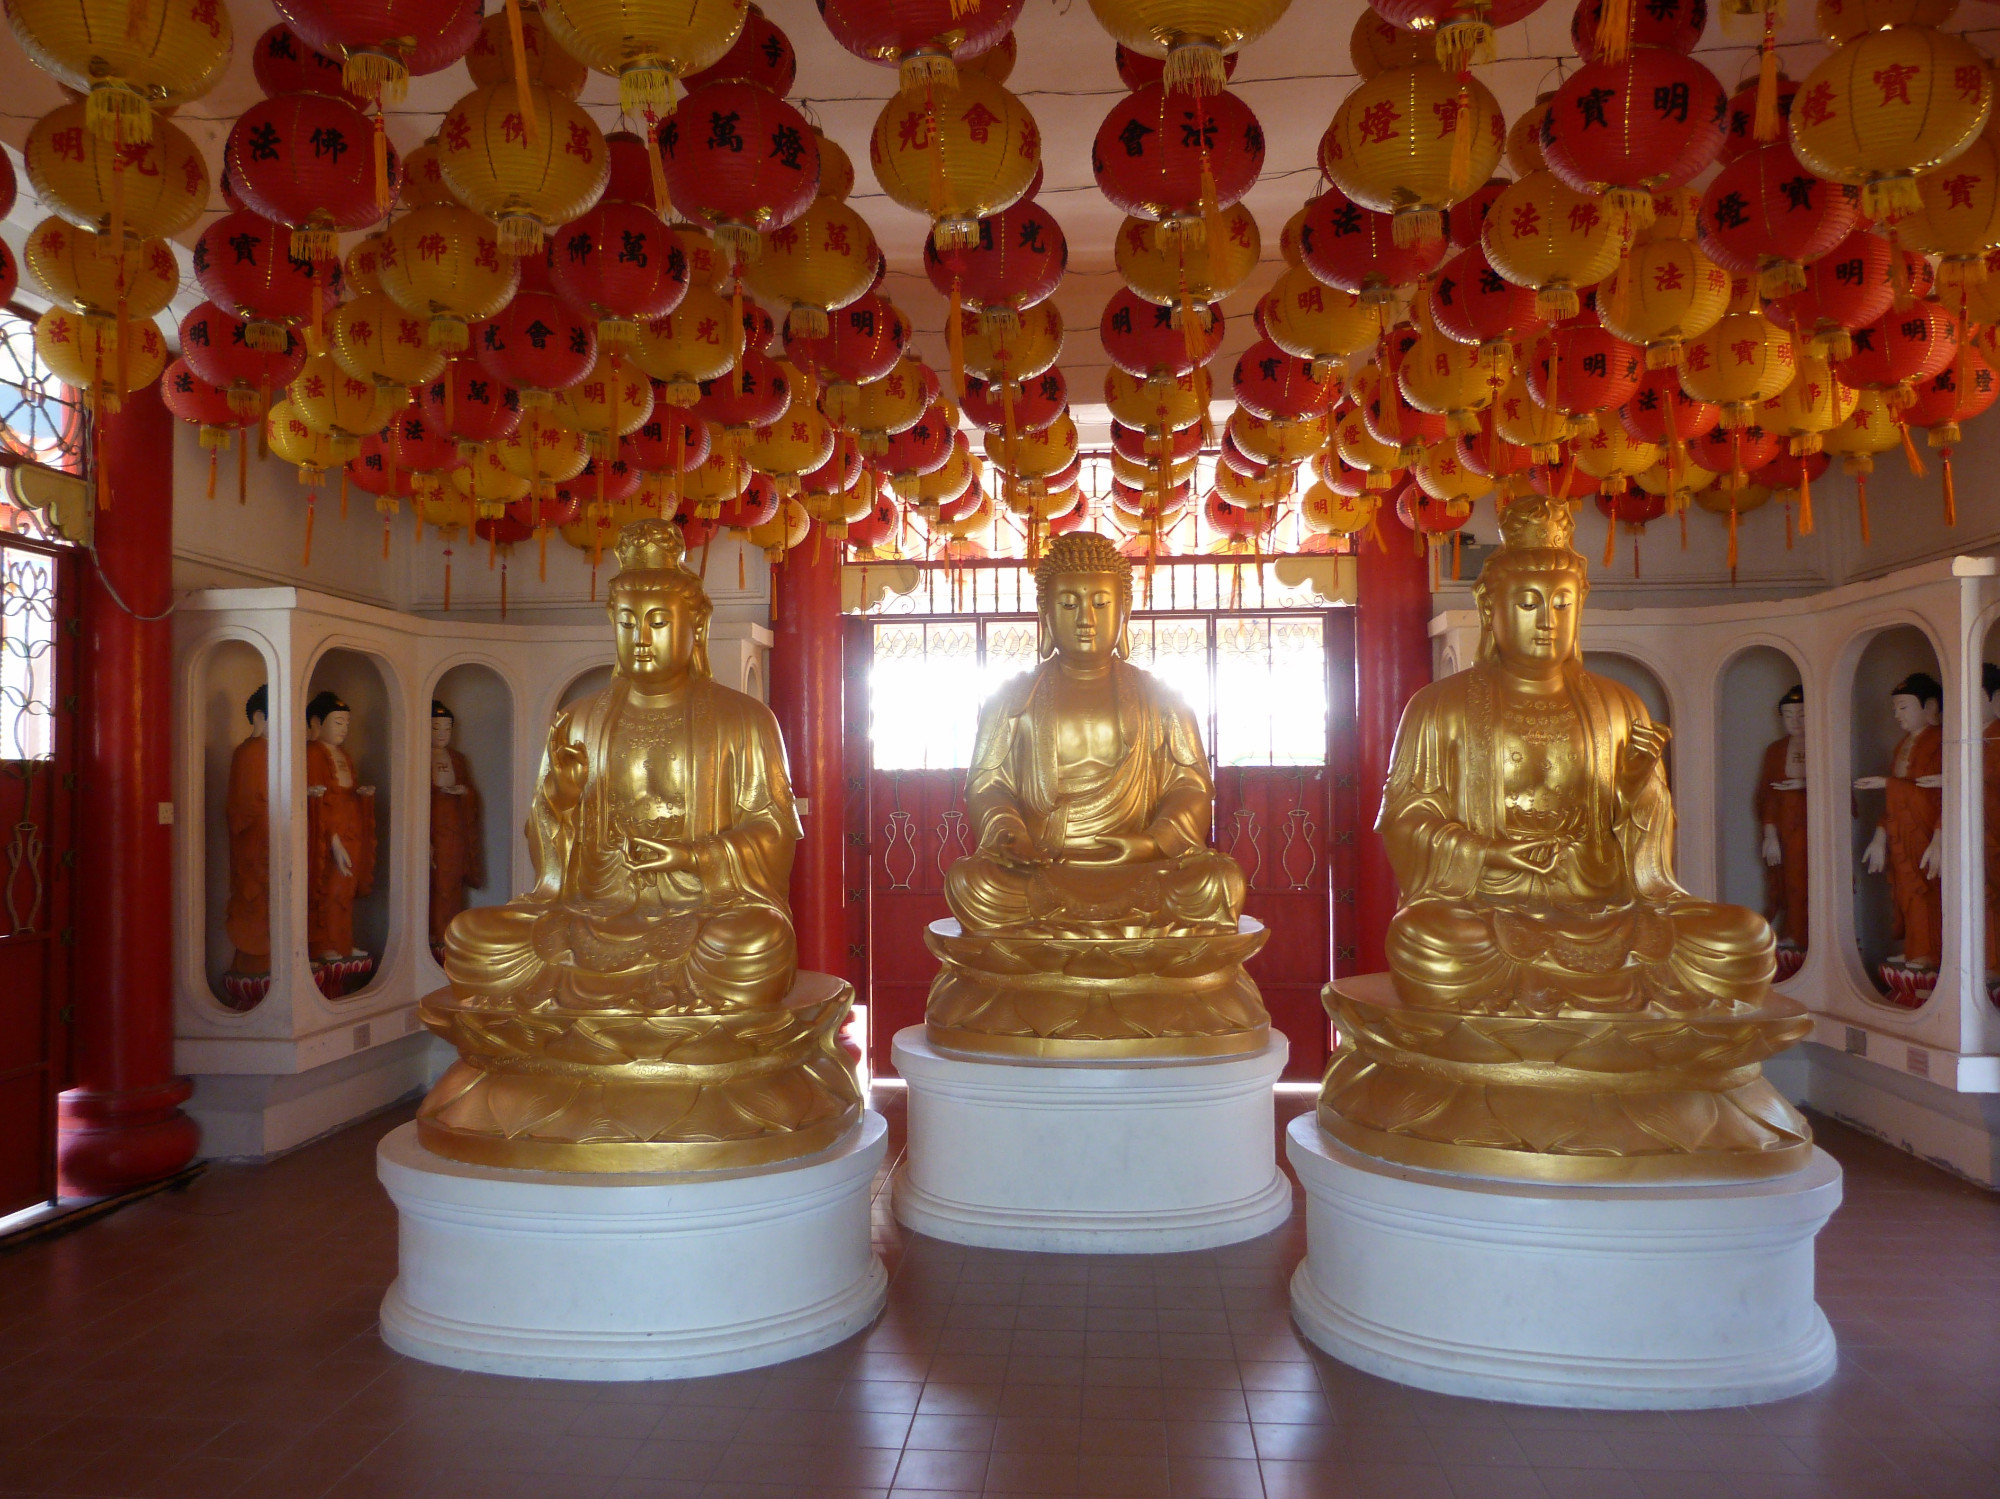 3 seated golden Buddhas